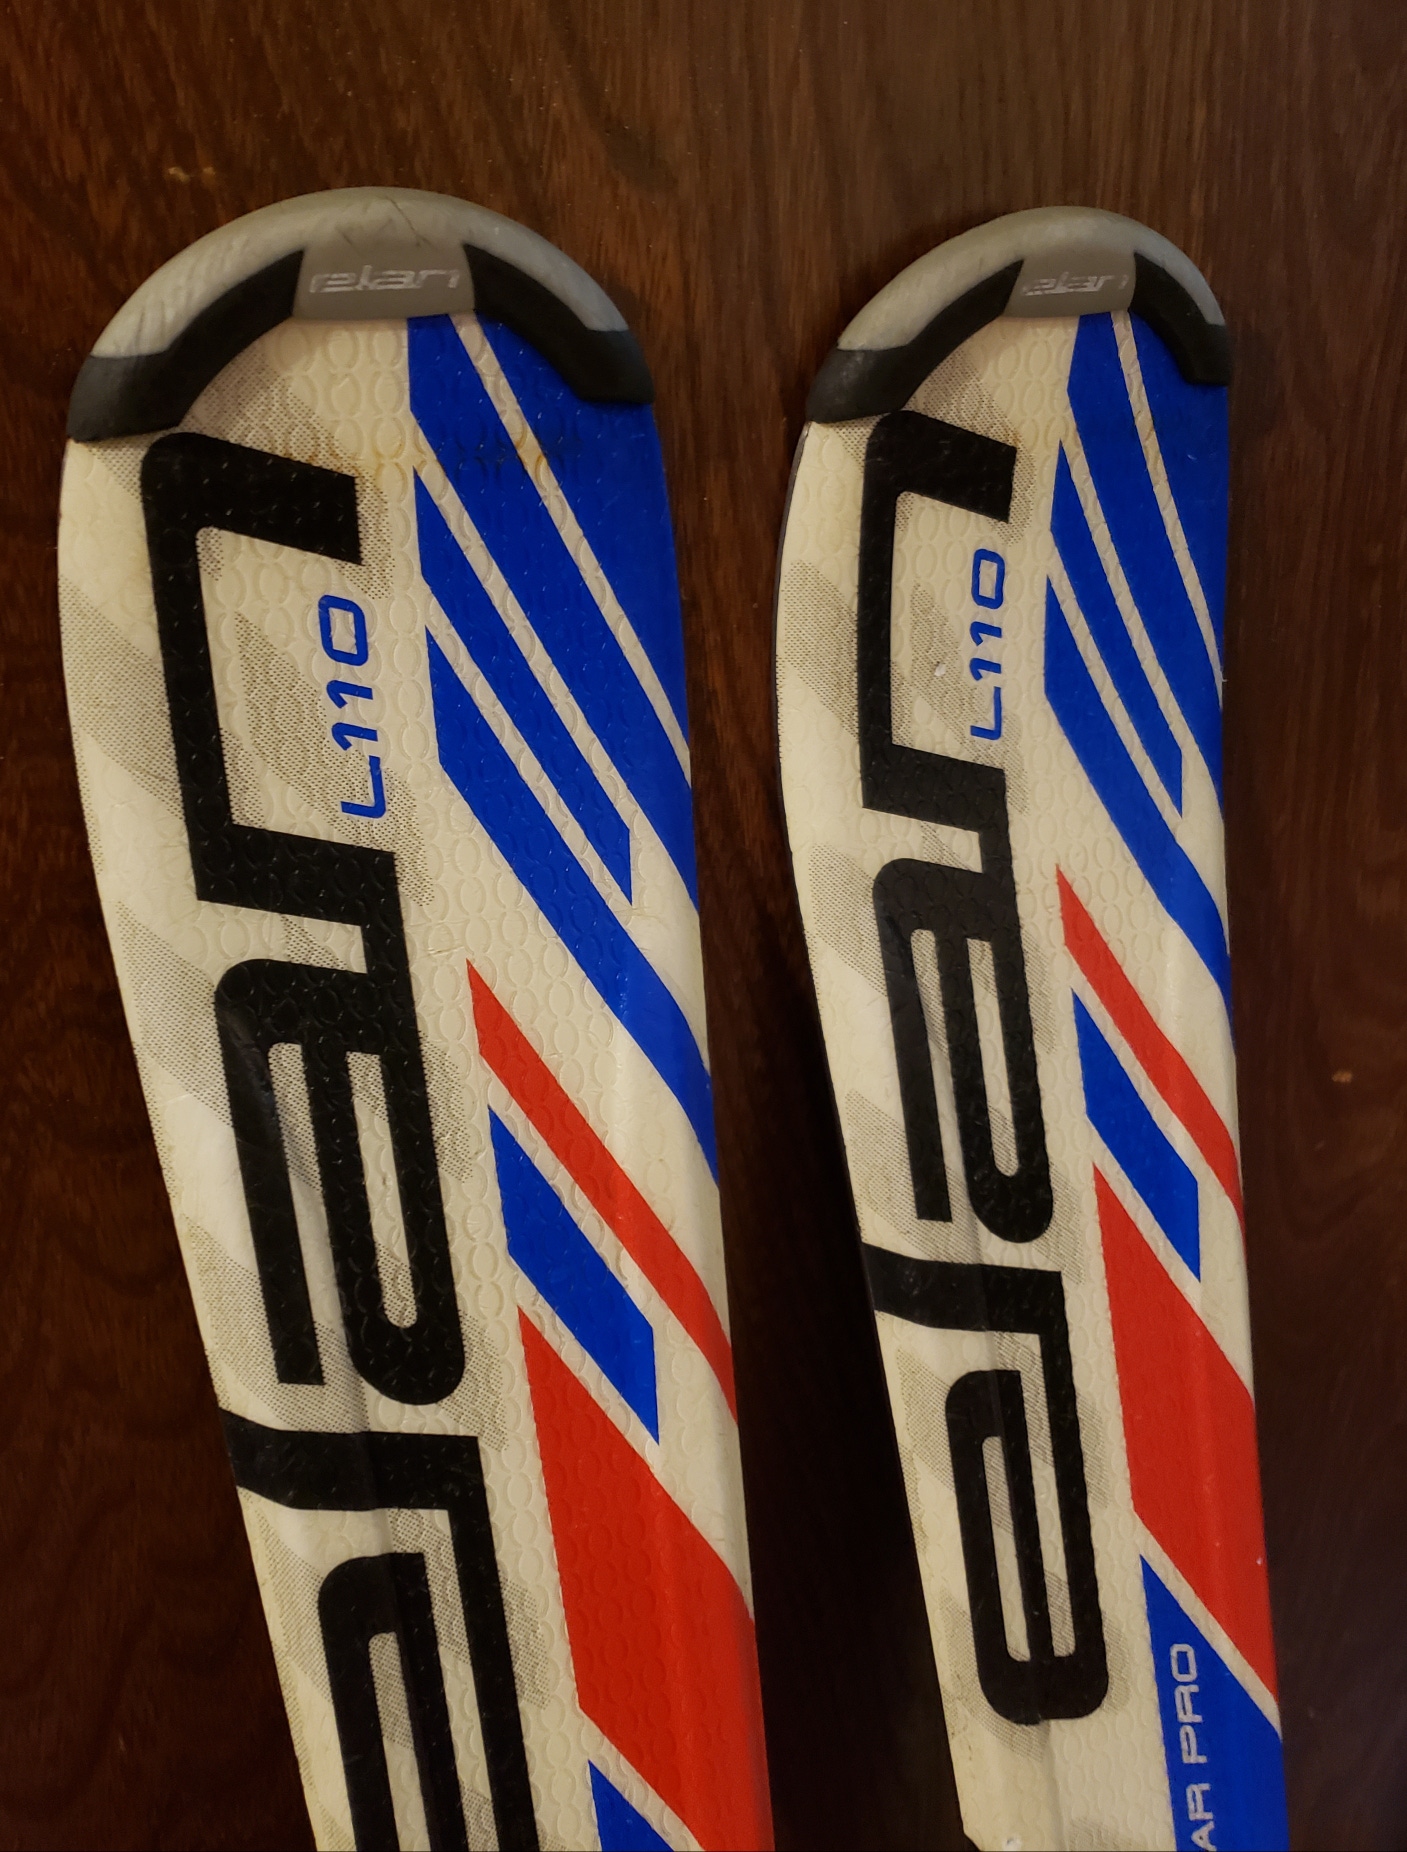 110cm Jr./Kids Skis ELAN EXAR PRO with Jr. ELAN ESP 4.5 Adjustable Bindings *USED* CLEAN